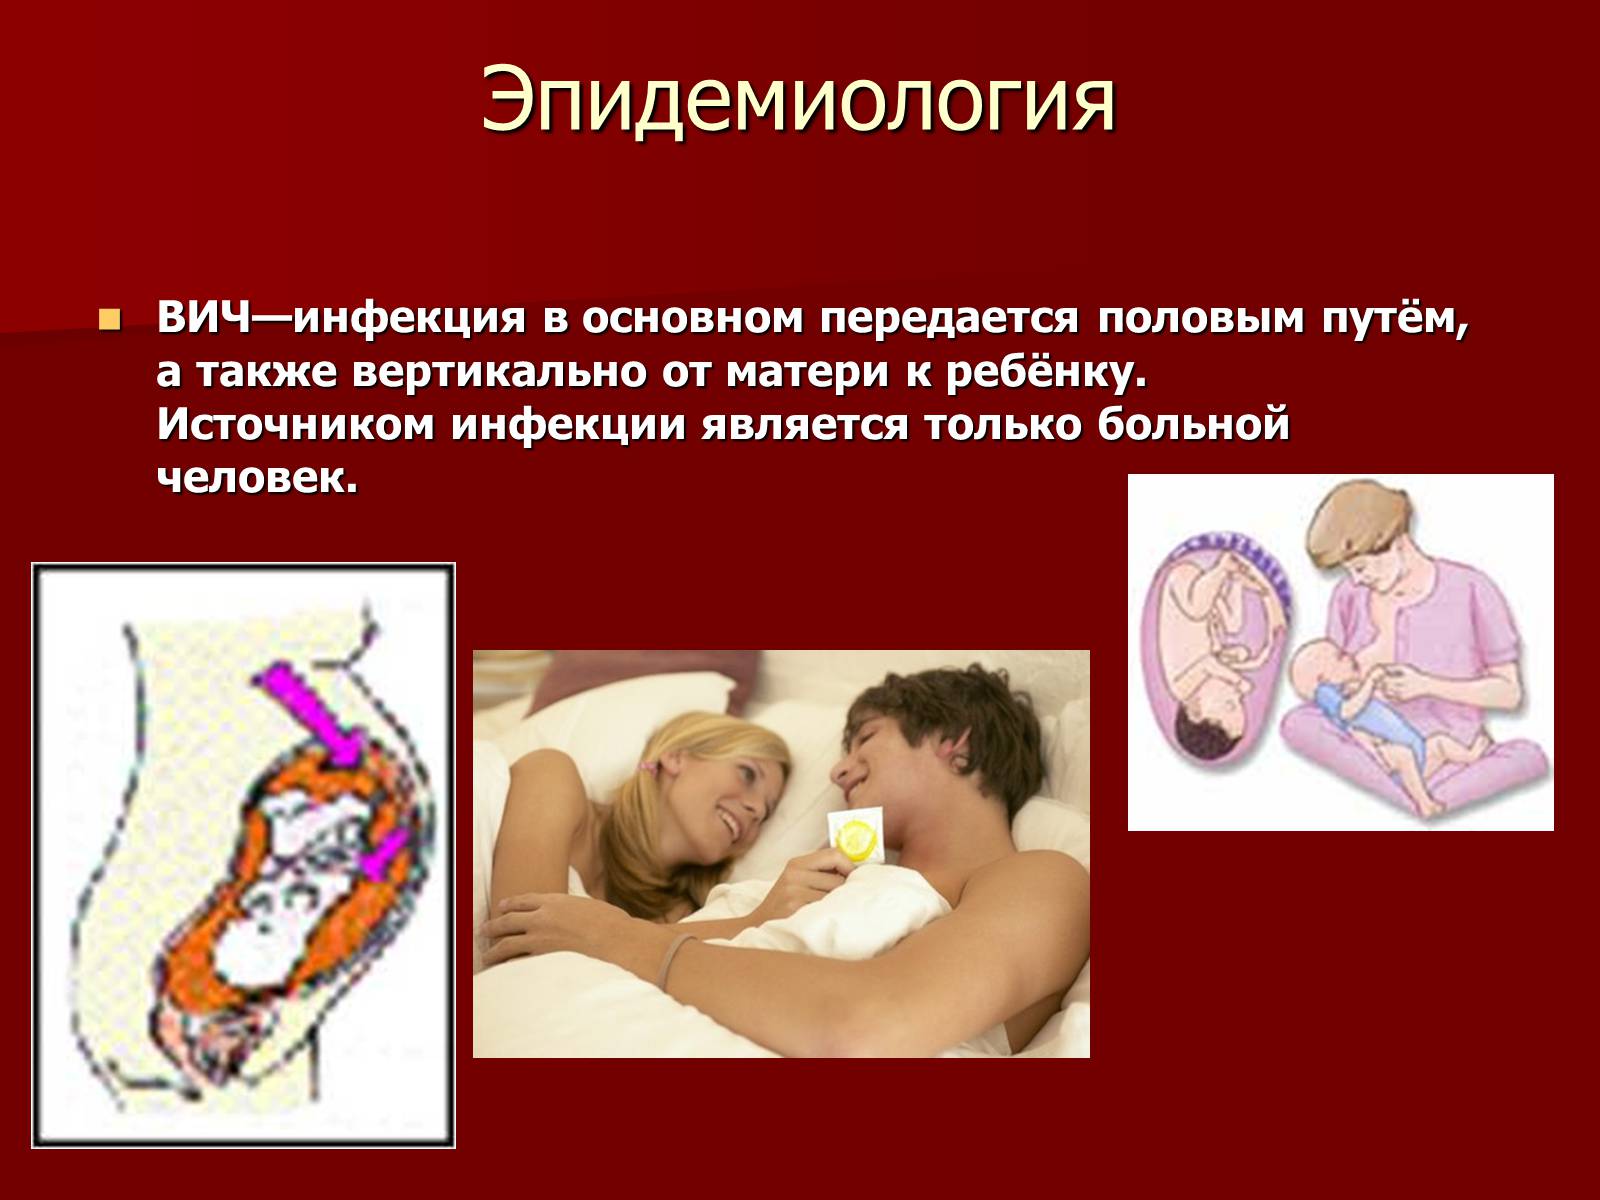 Заболевания передающиеся поцелуями. Пути передачи ВИЧ инфекции. СПИД передается половым путем. Пути передачи половых инфекций.